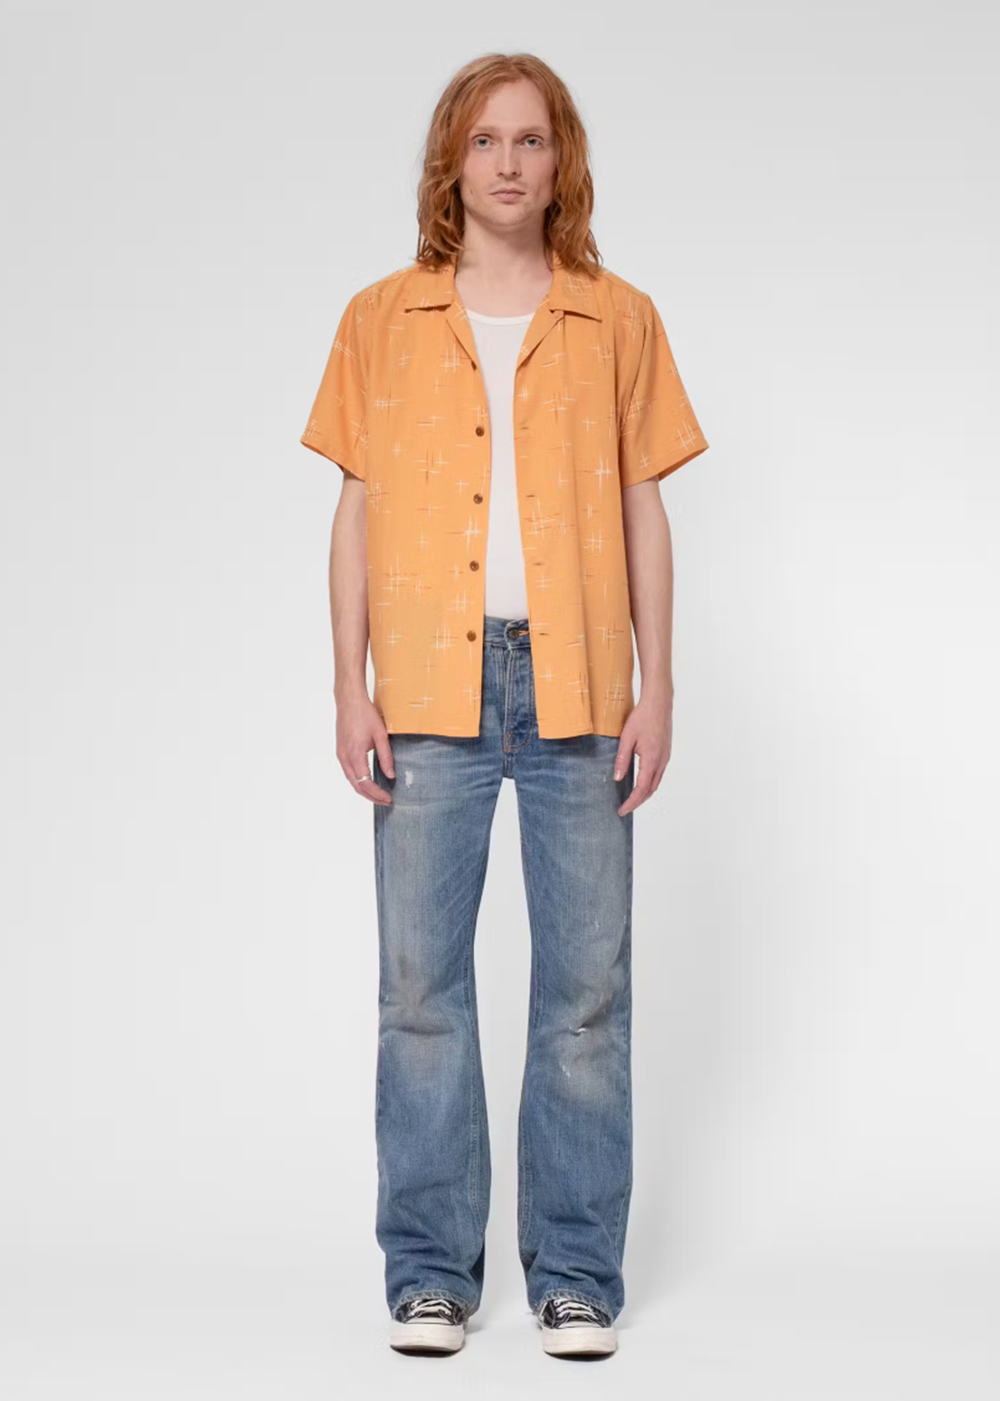 Arvid 50s Hawaii Shirt - Ochre - Nudie Jeans Canada - Danali